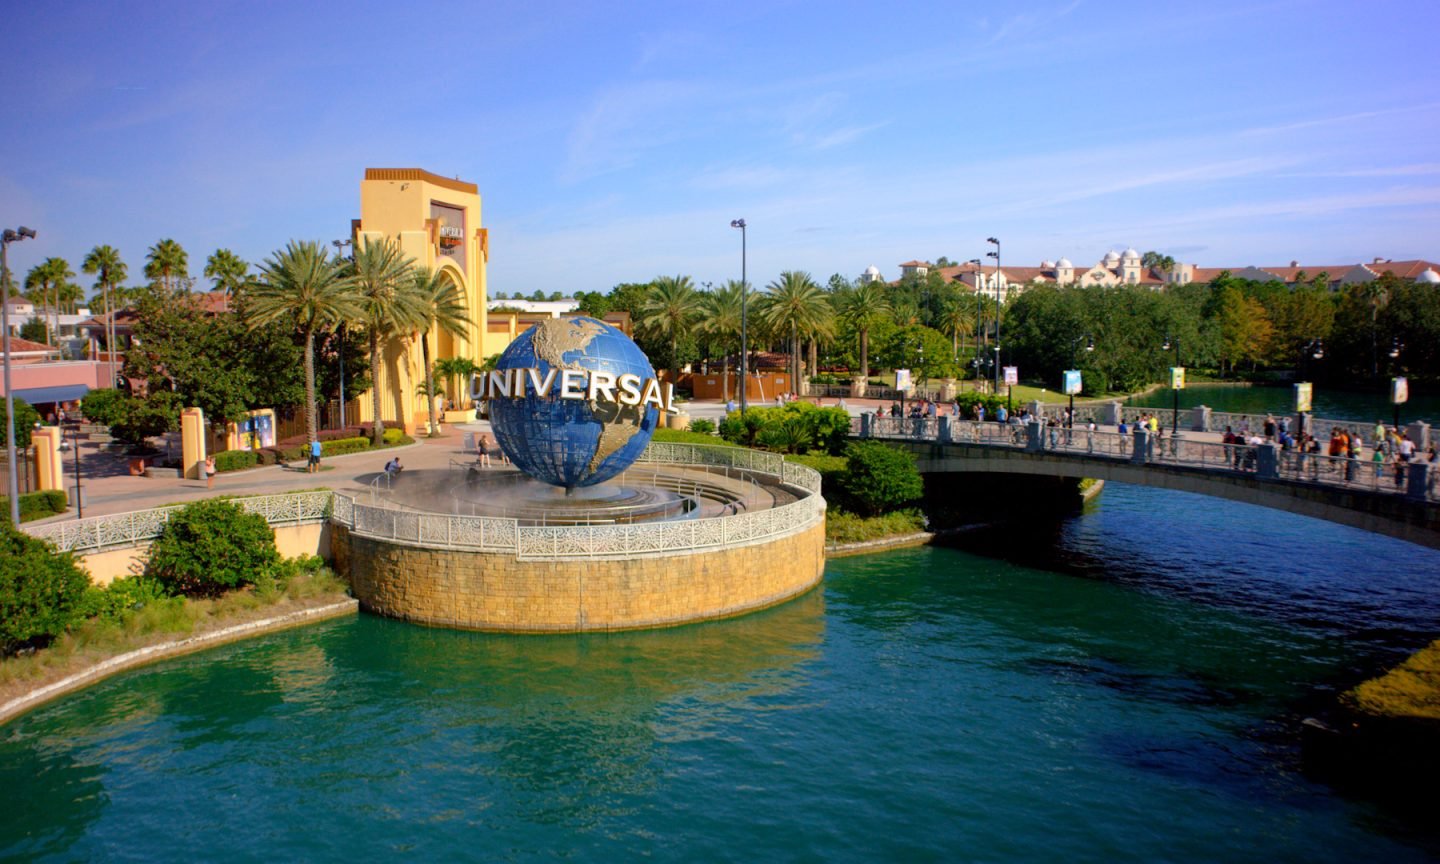 Universal Studios Orlando Parking, Complete Guide - Universal Studios  Orlando Vacation Packages, Discounts, Hotels, Park Tickets